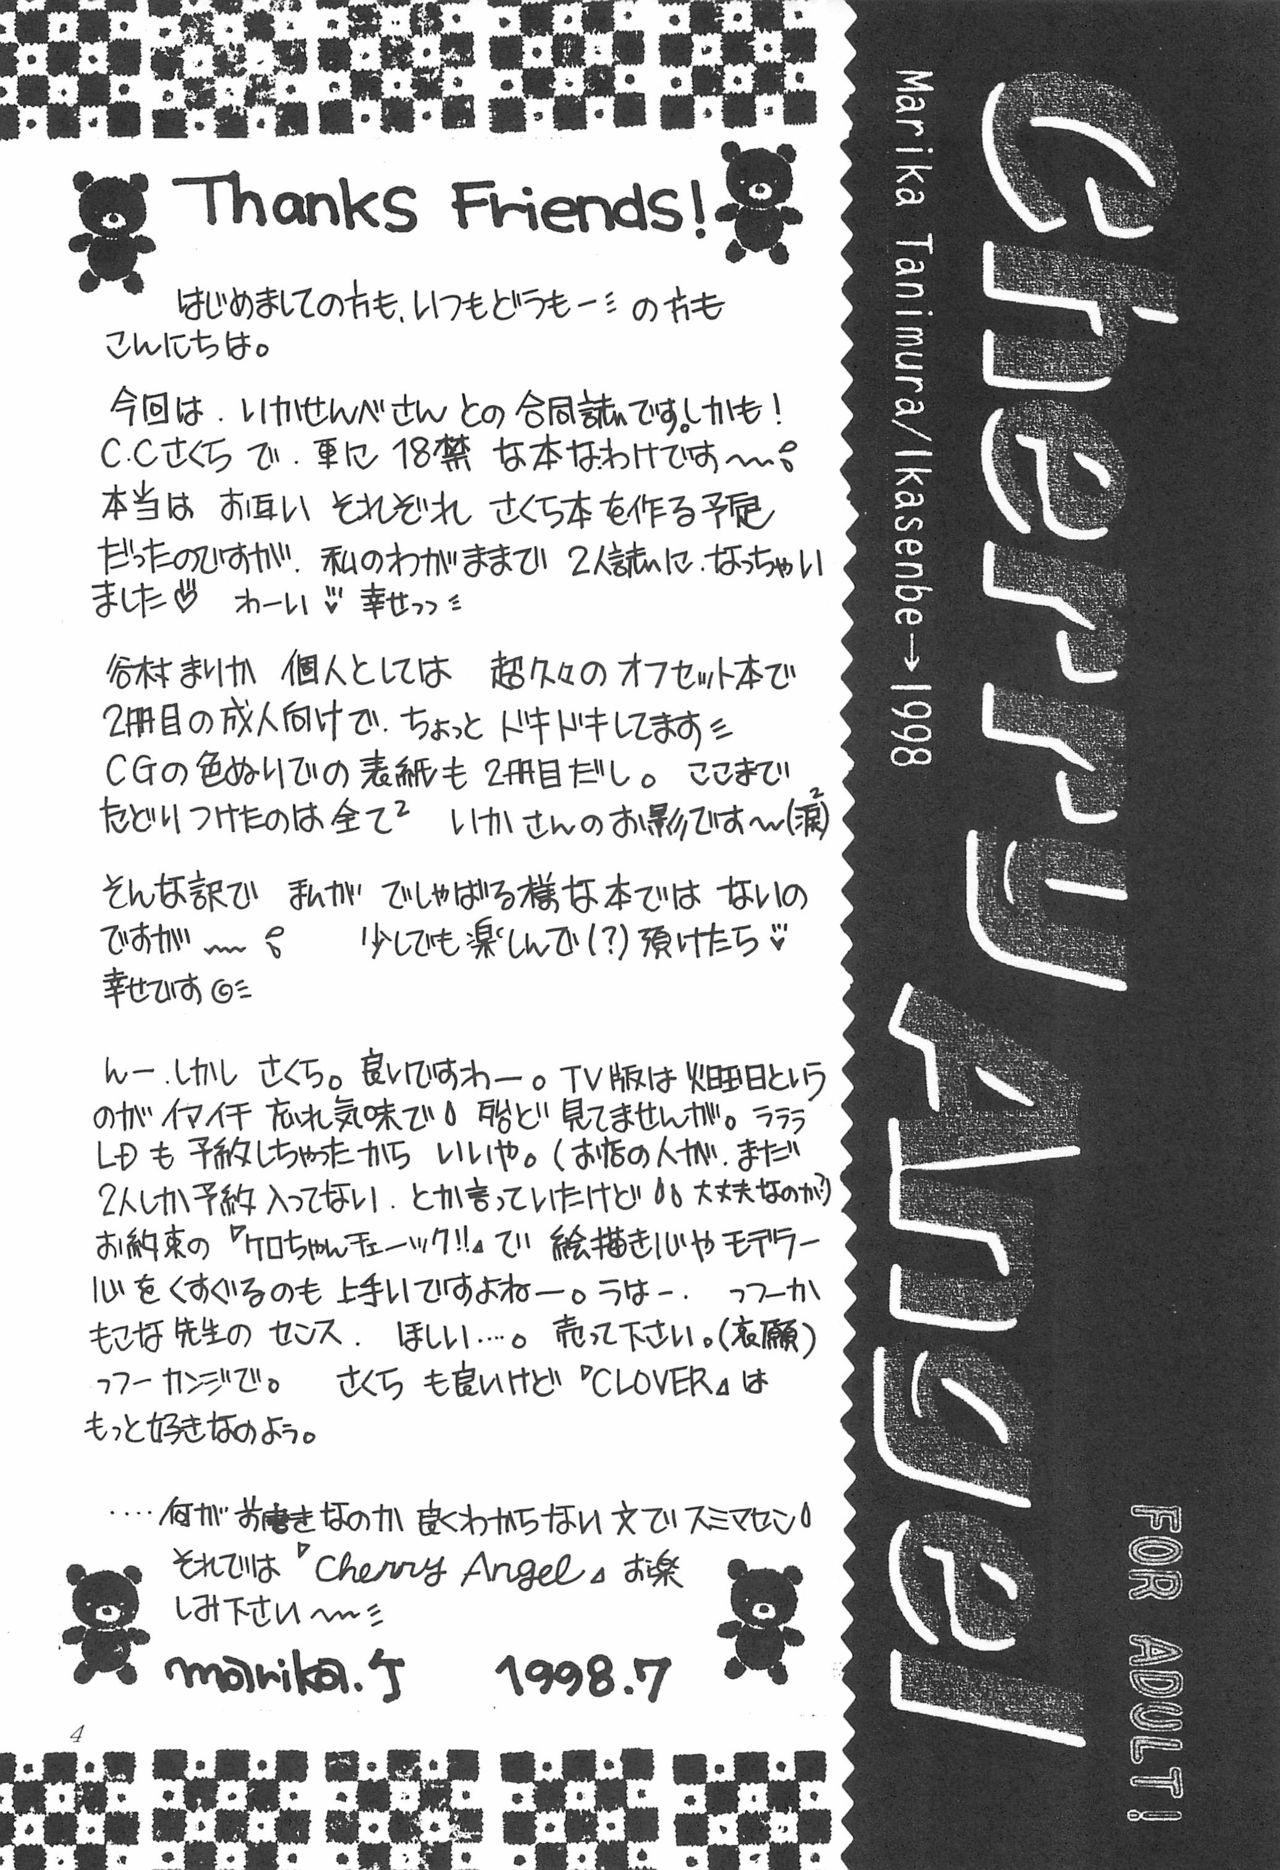 Juicy Cherry Angel - Cardcaptor sakura Insertion - Page 6